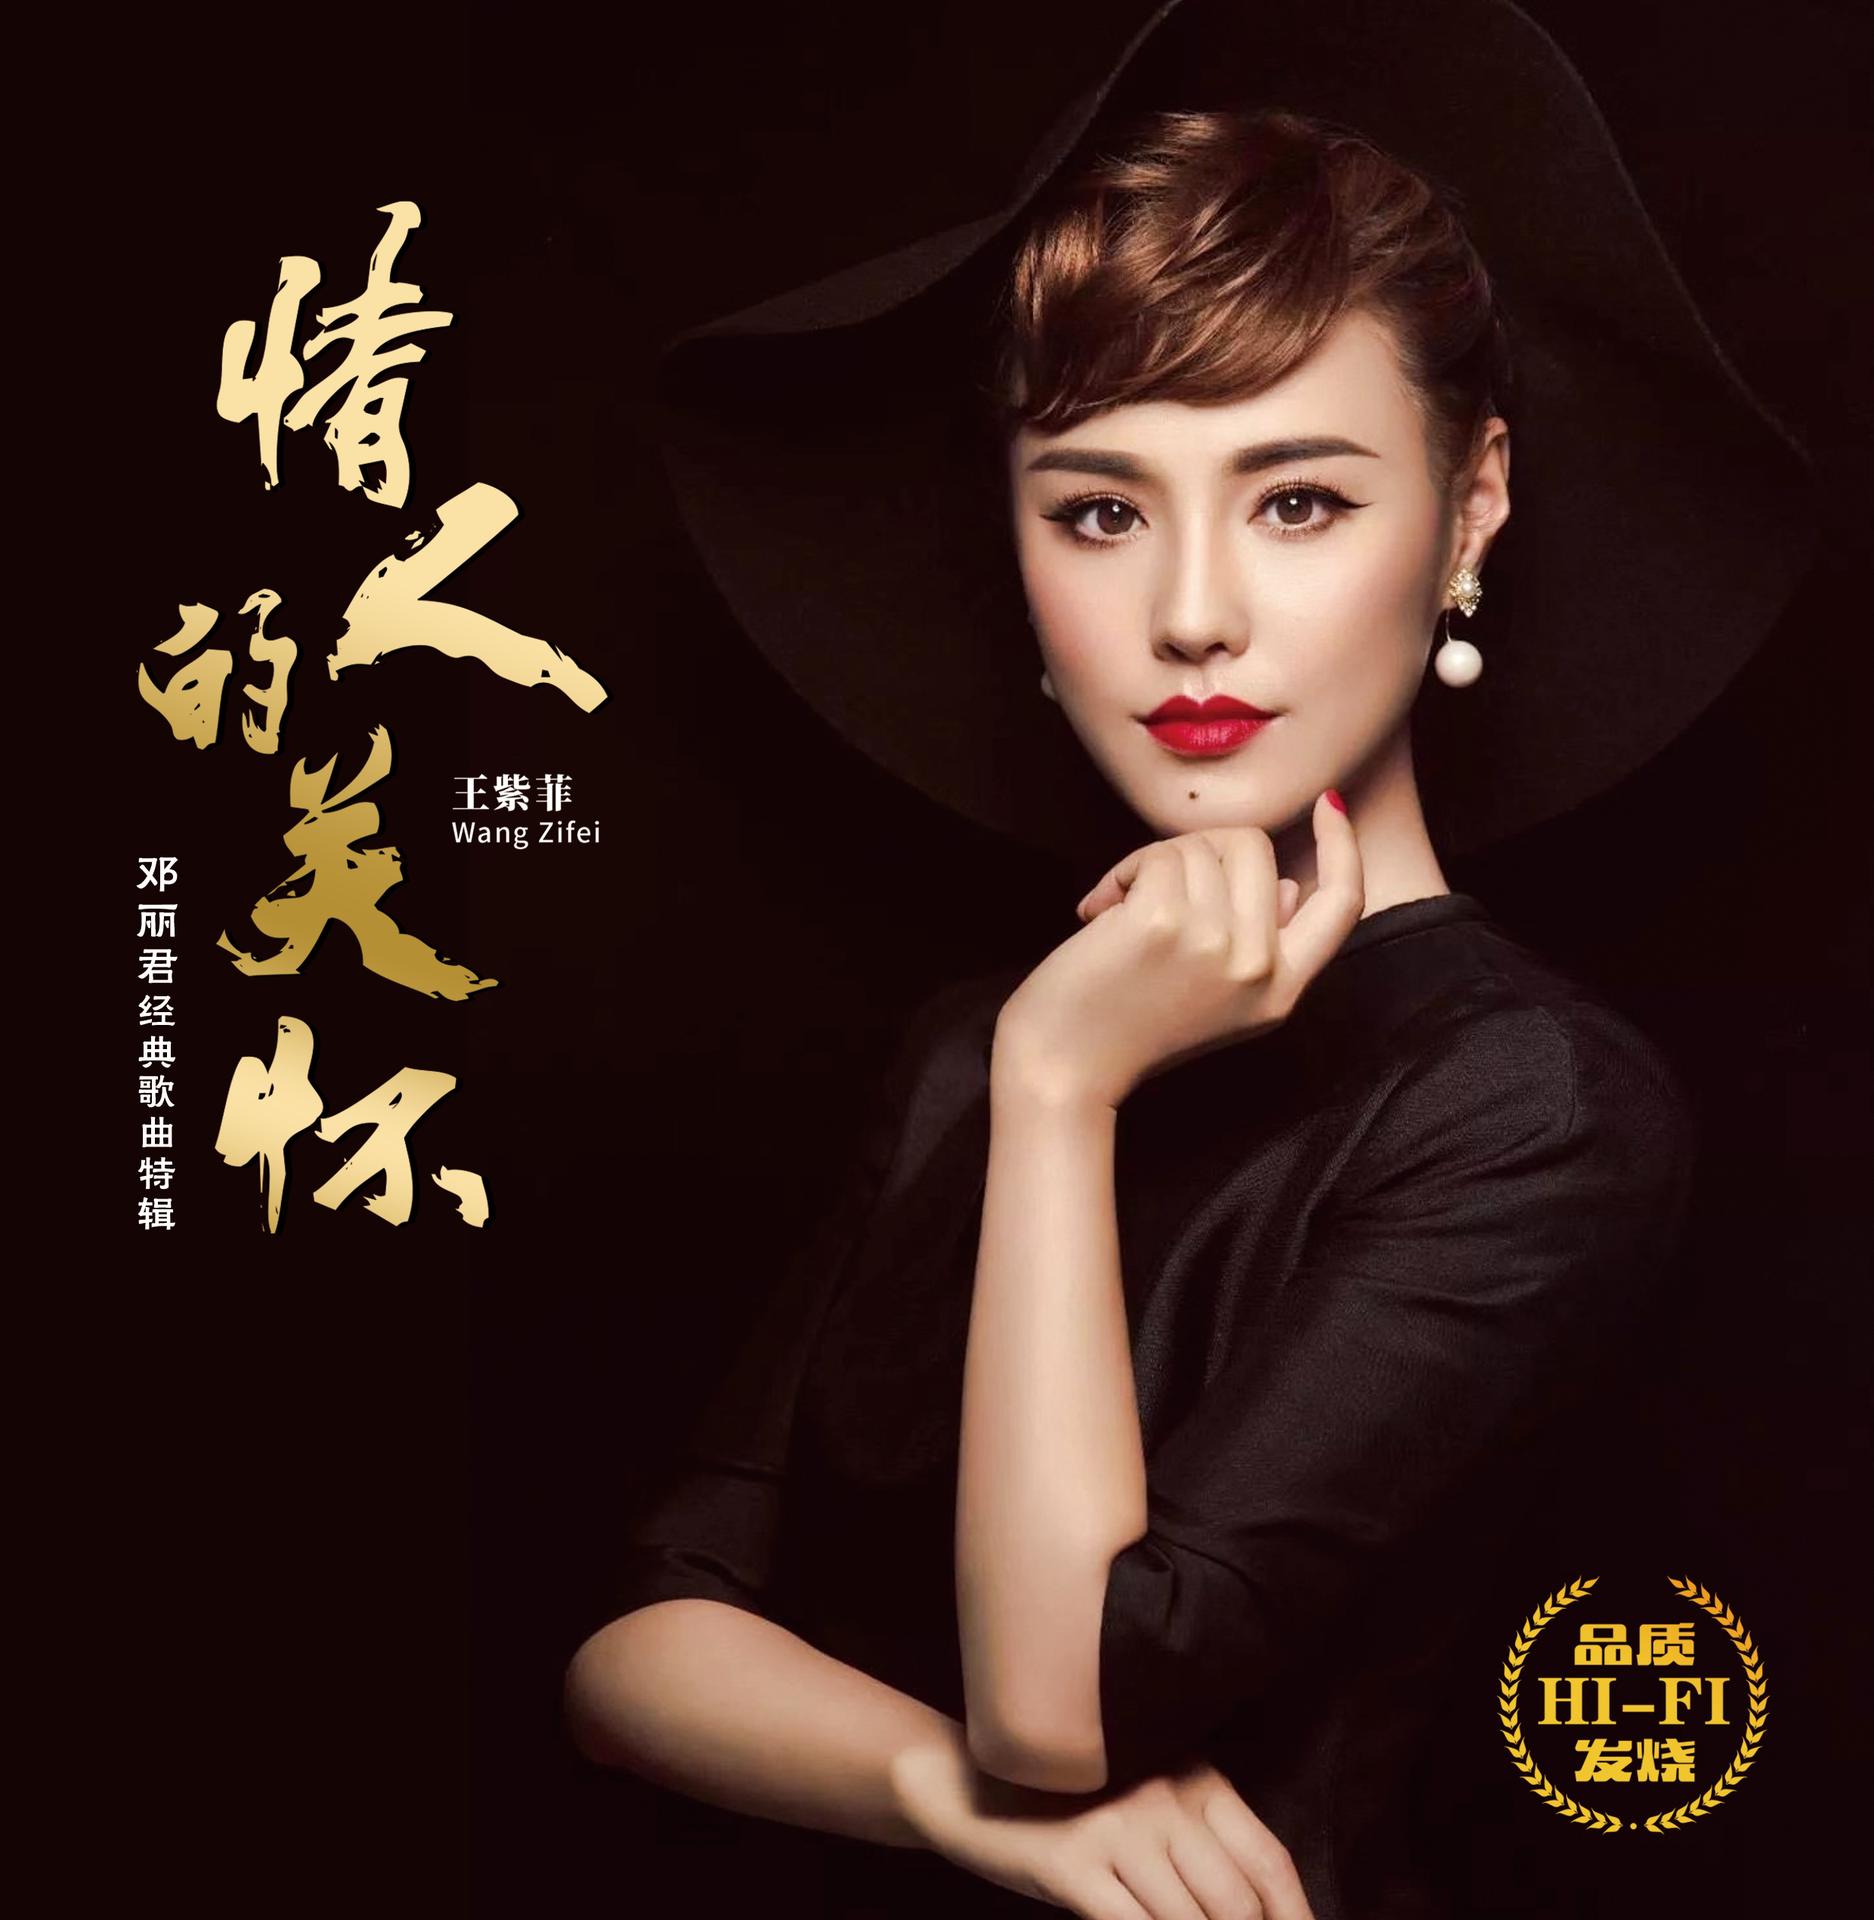 ‎紅的演歌(2): 小雨小雨 by Huang Yeeling on Apple Music